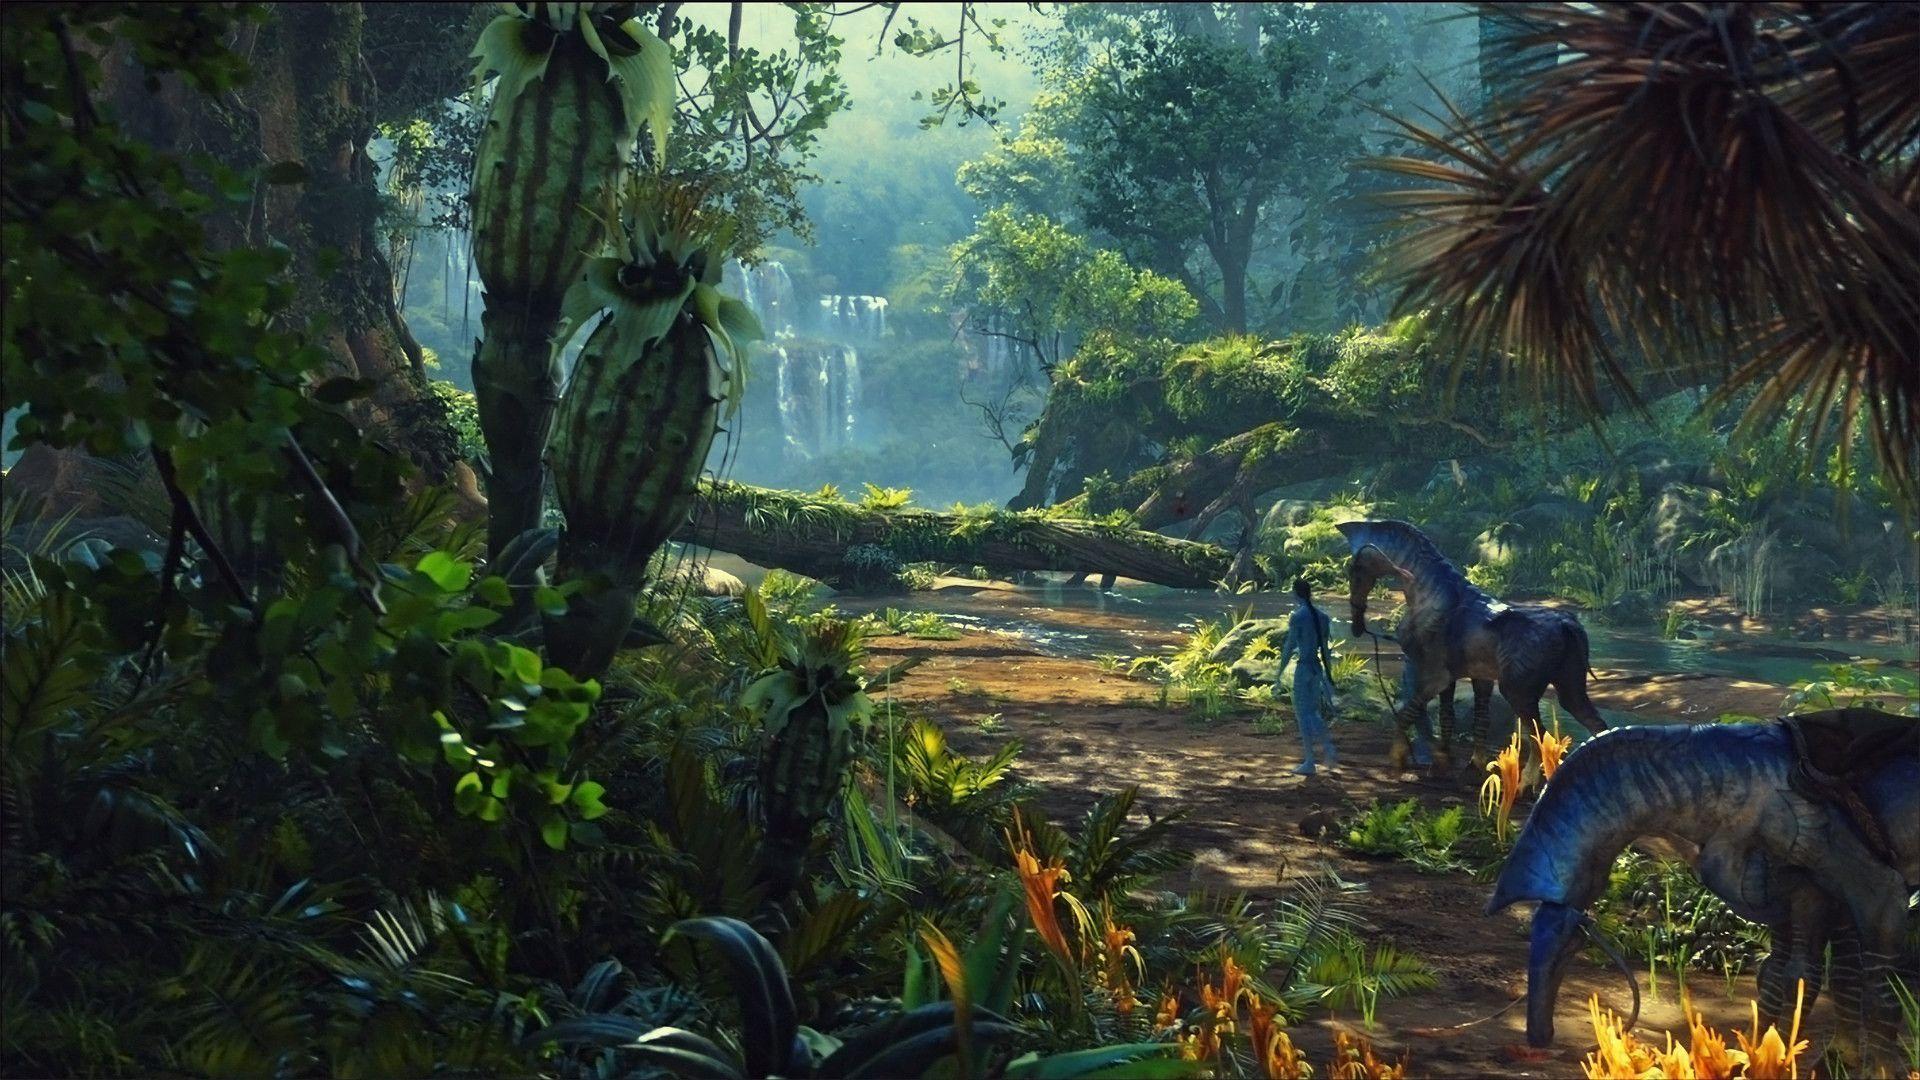 Avatar Backgrounds